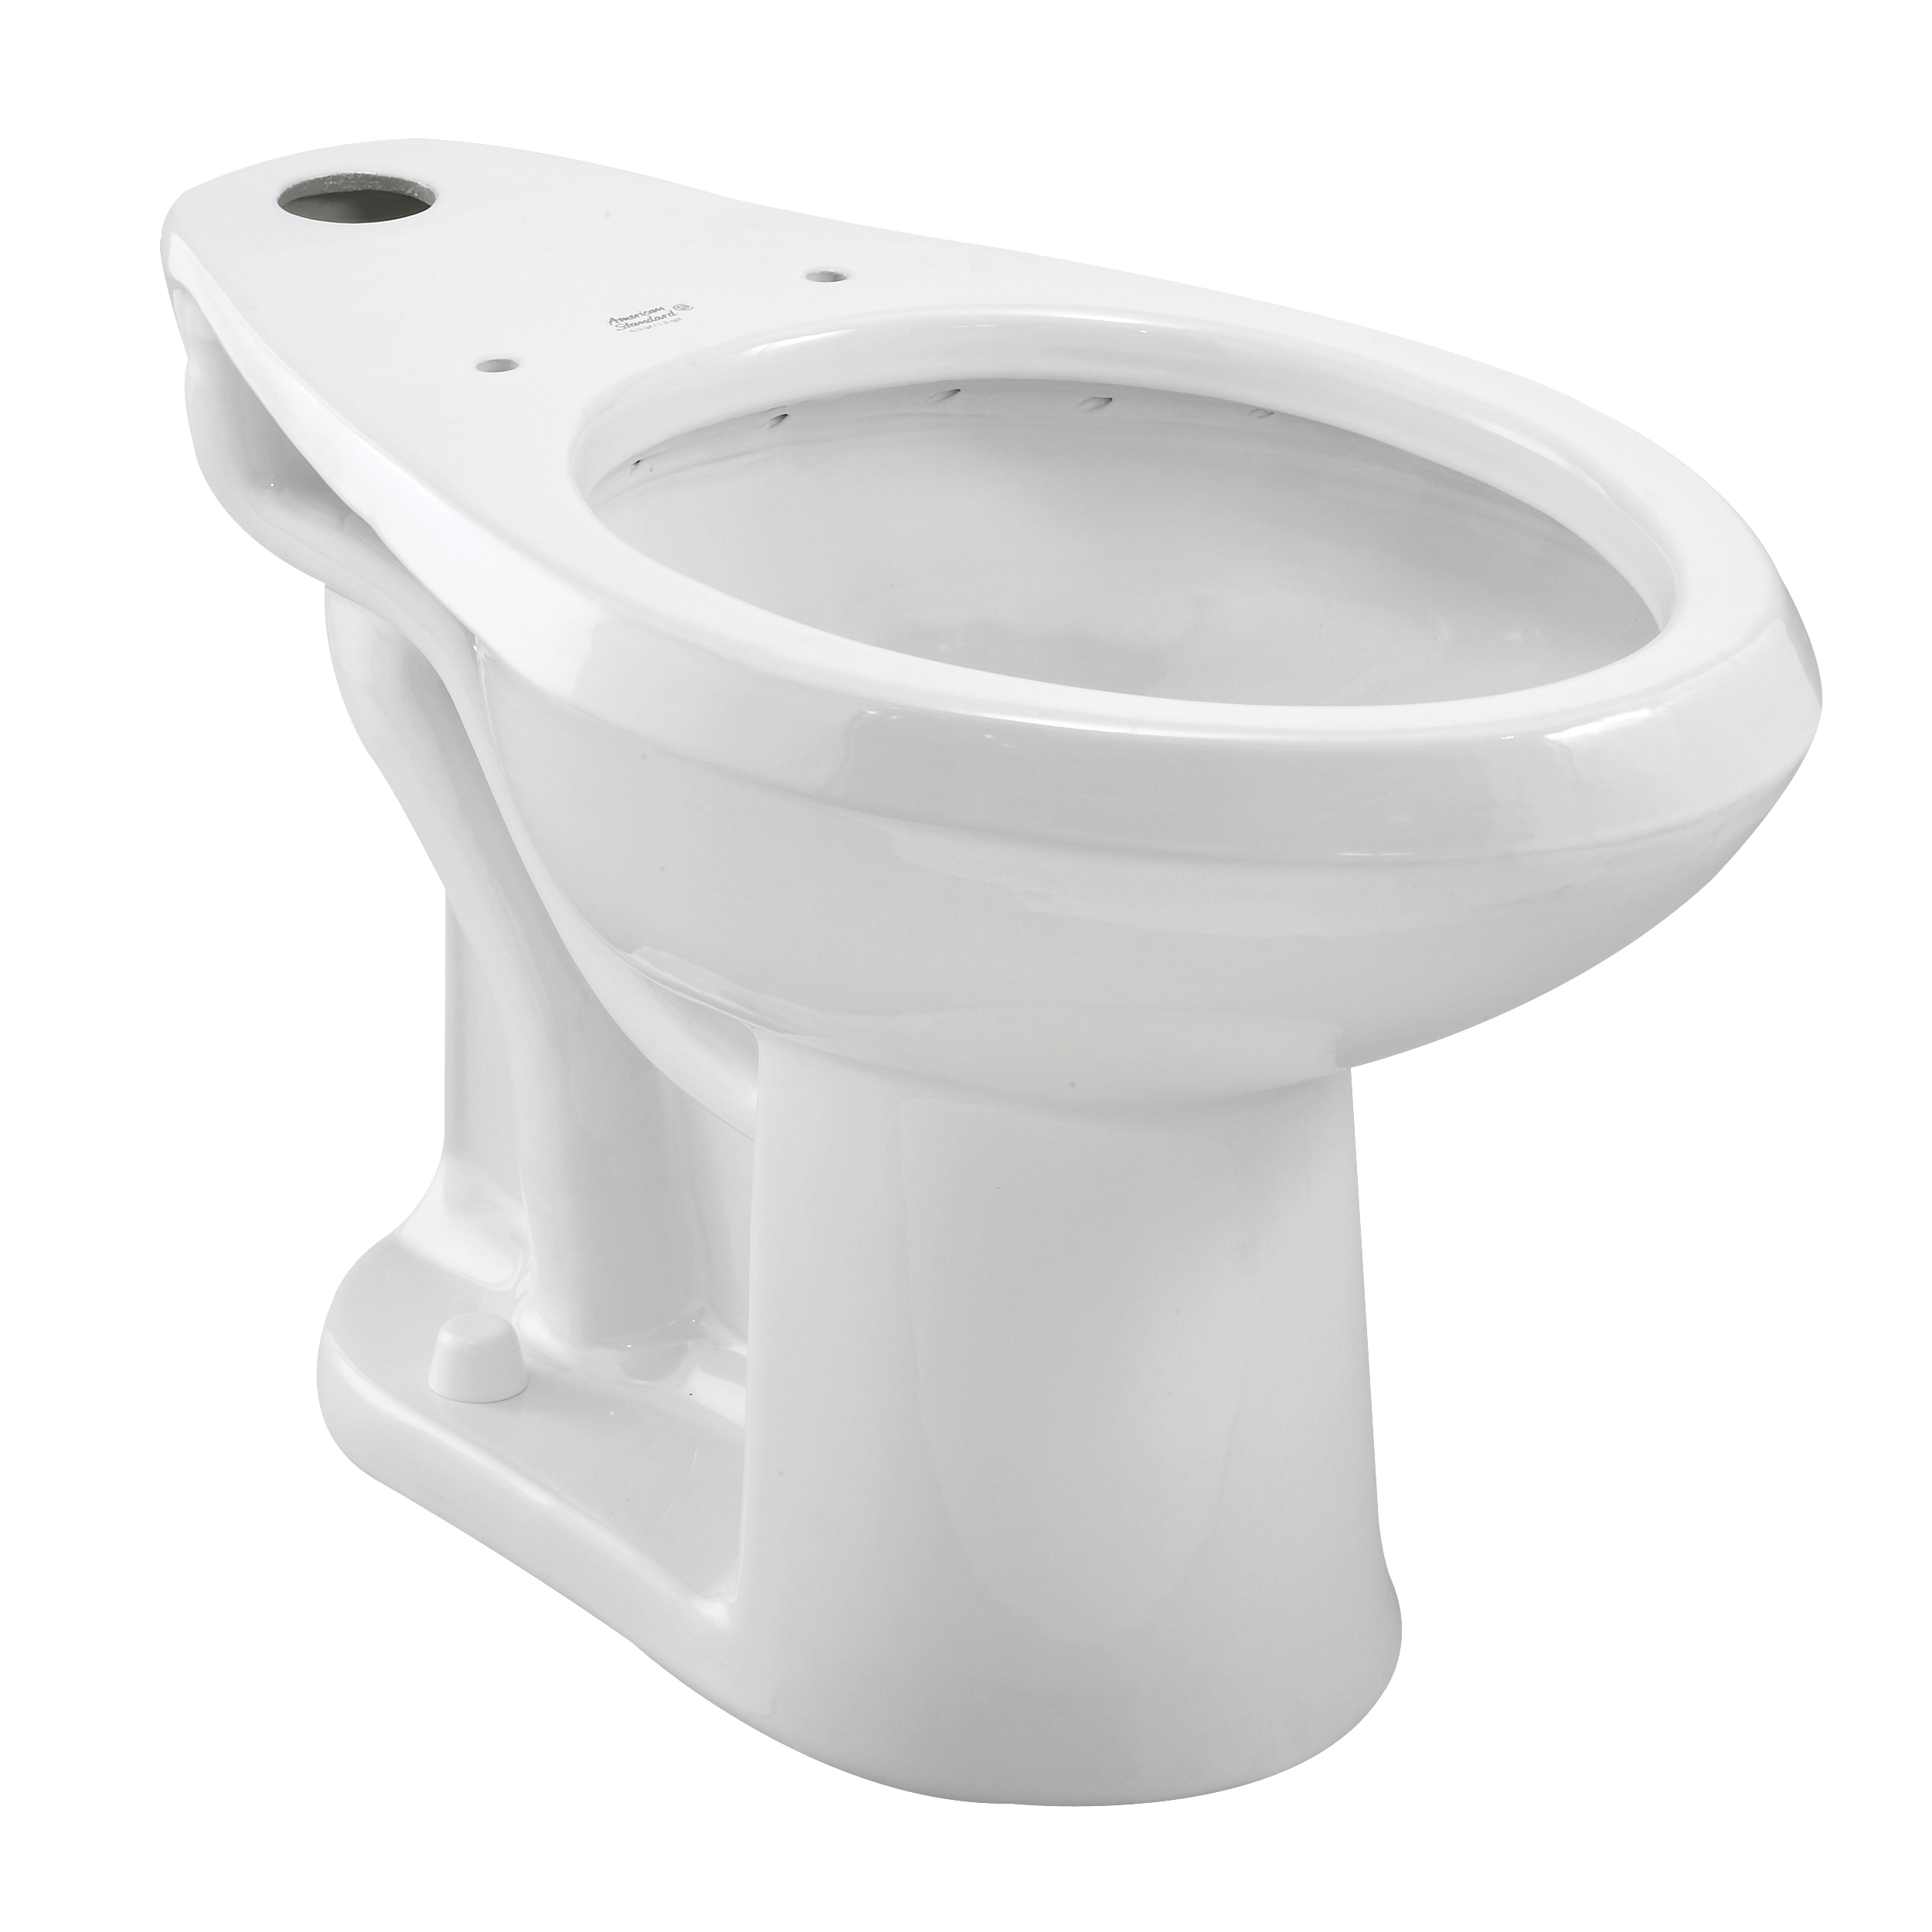 Madera Series 3043.001.020 Toilet Bowl, Elongated, Vitreous China, White, Floor Mounting